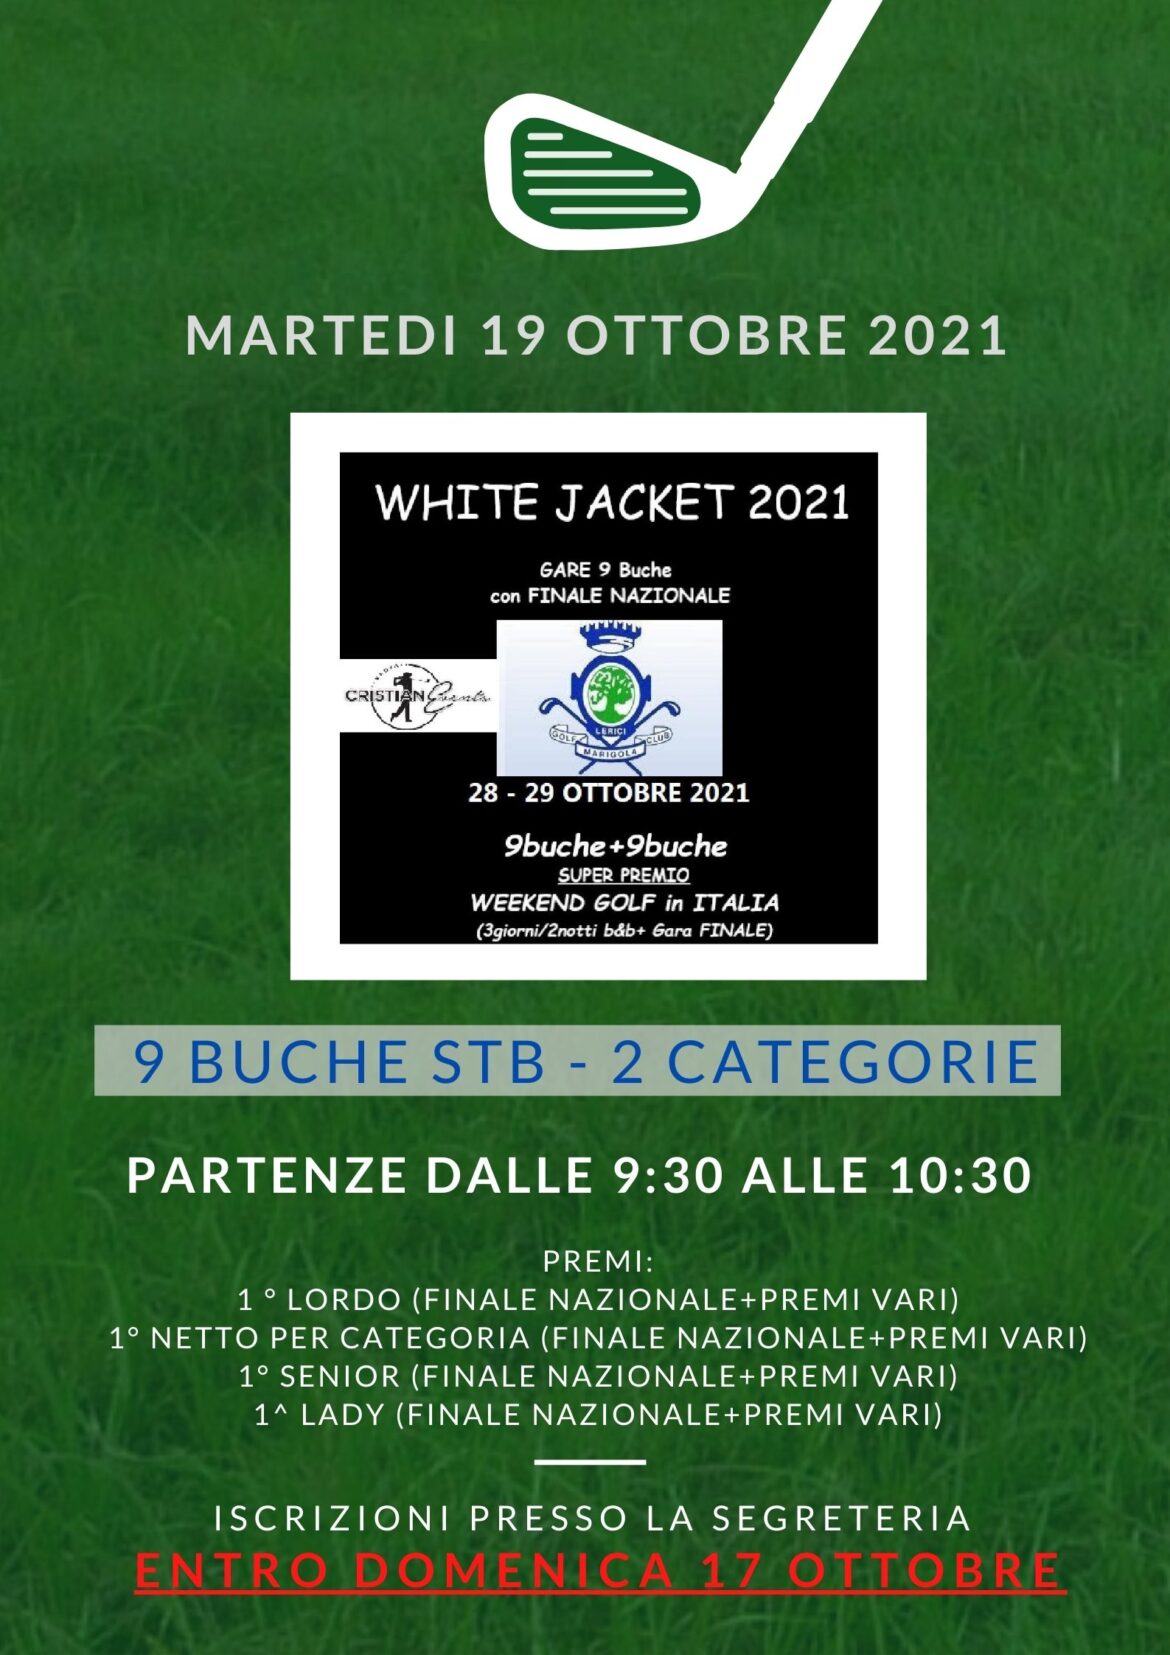 WHITE JACKET by Nuova Cristianevents (last change) – 19 ottobre 2021